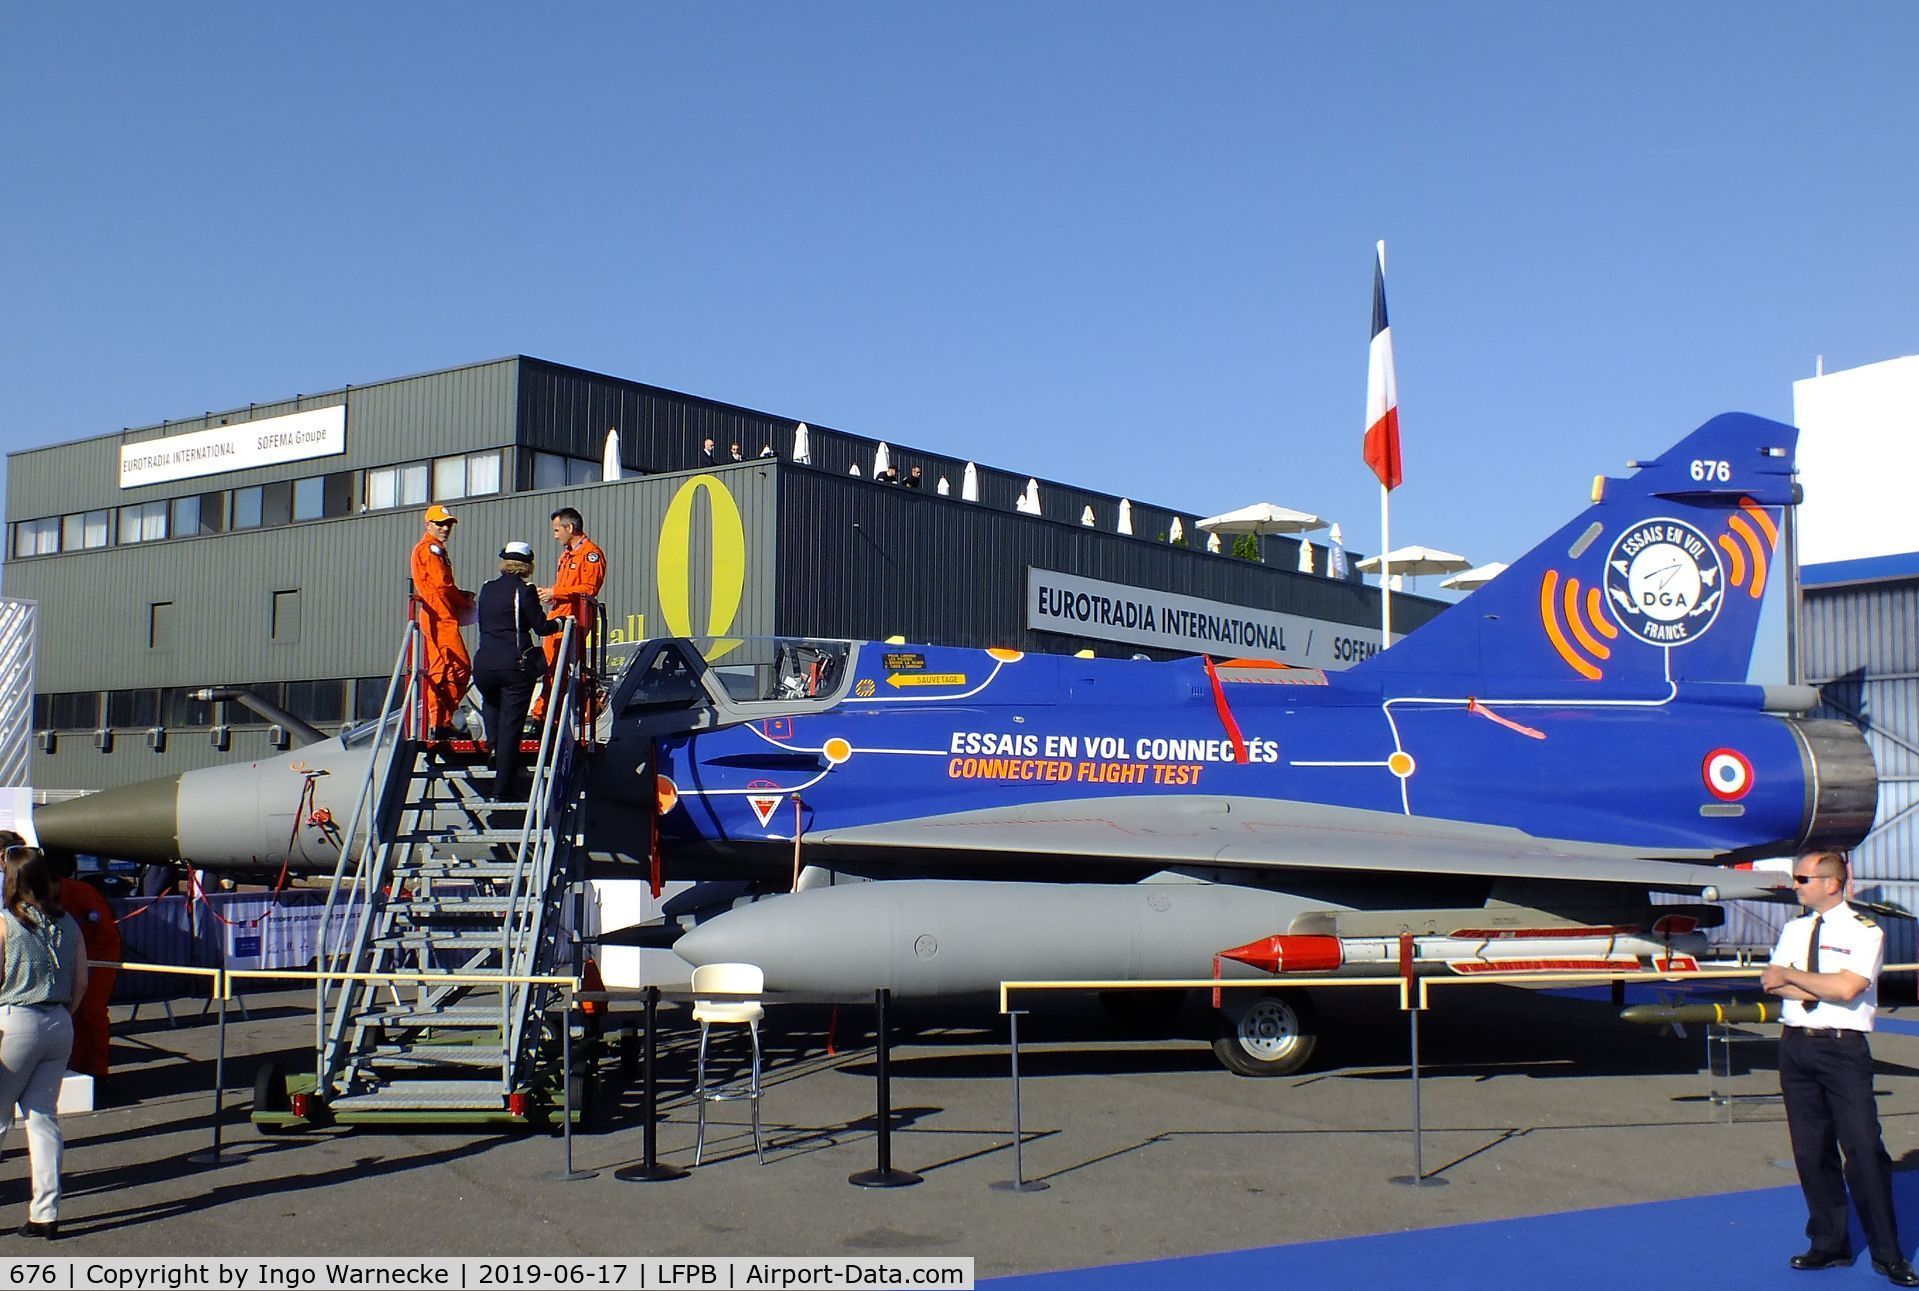 676, Dassault Mirage 2000D C/N 550, Dassault Mirage 2000D of the DGA / Armee de l'Air at the Aerosalon 2019, Paris